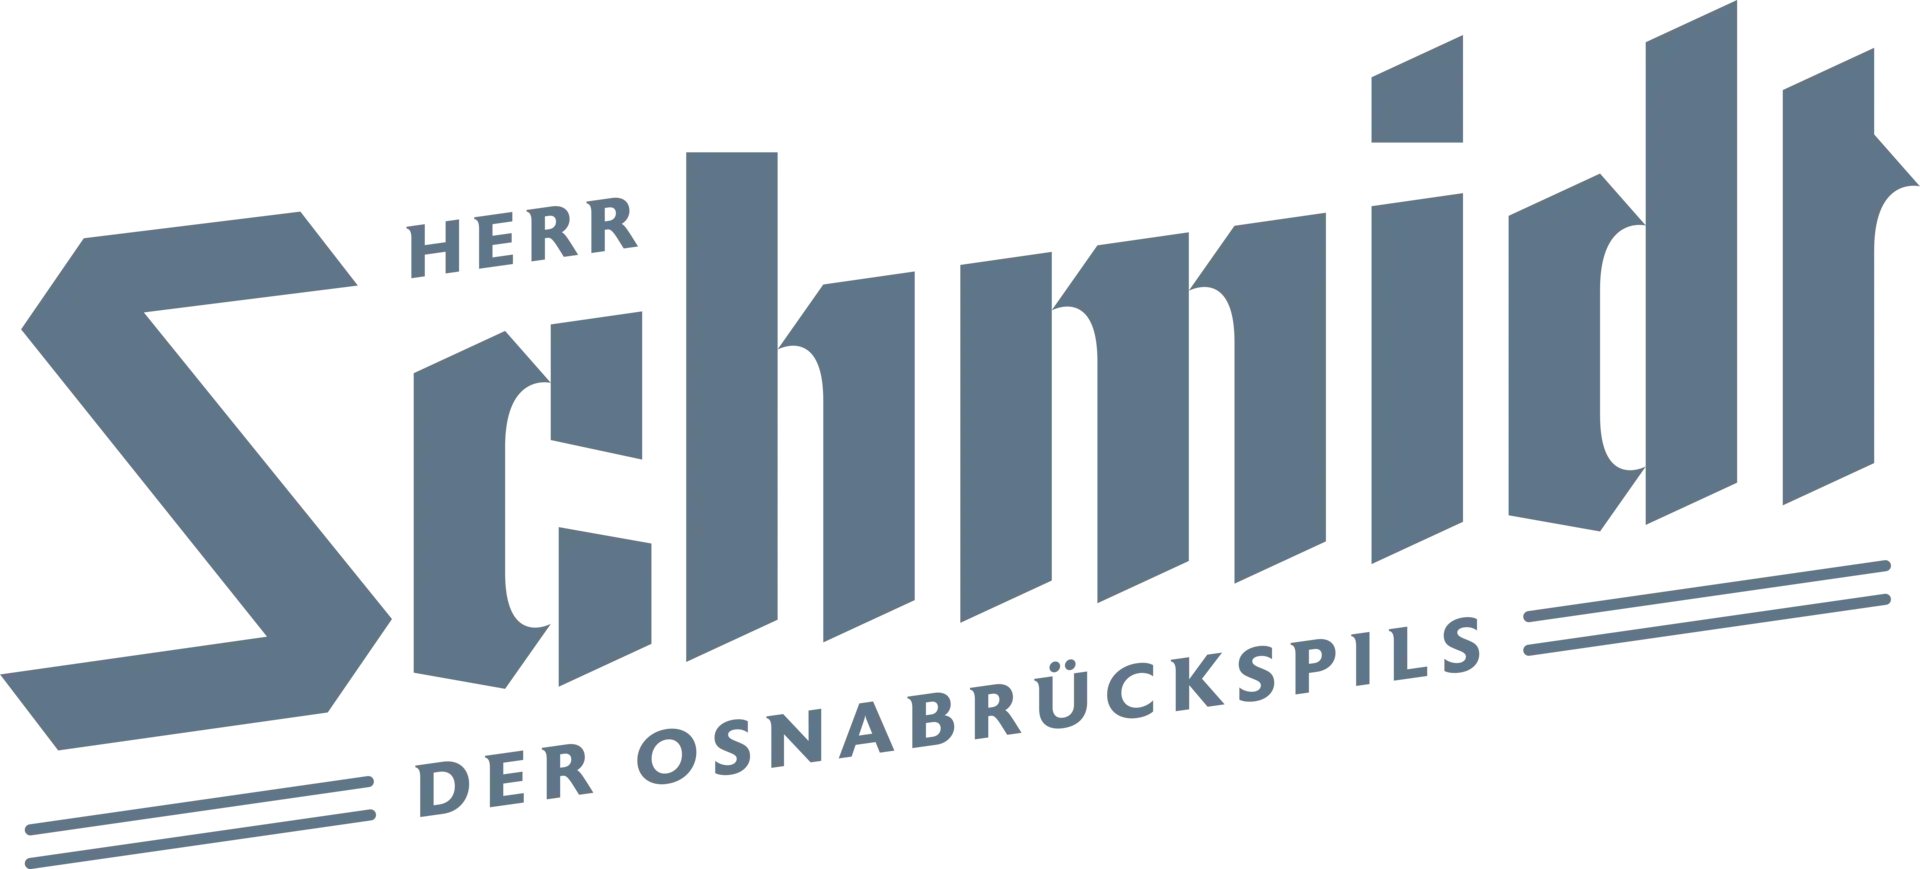 100322-herrschmidt-logo-claim-eps